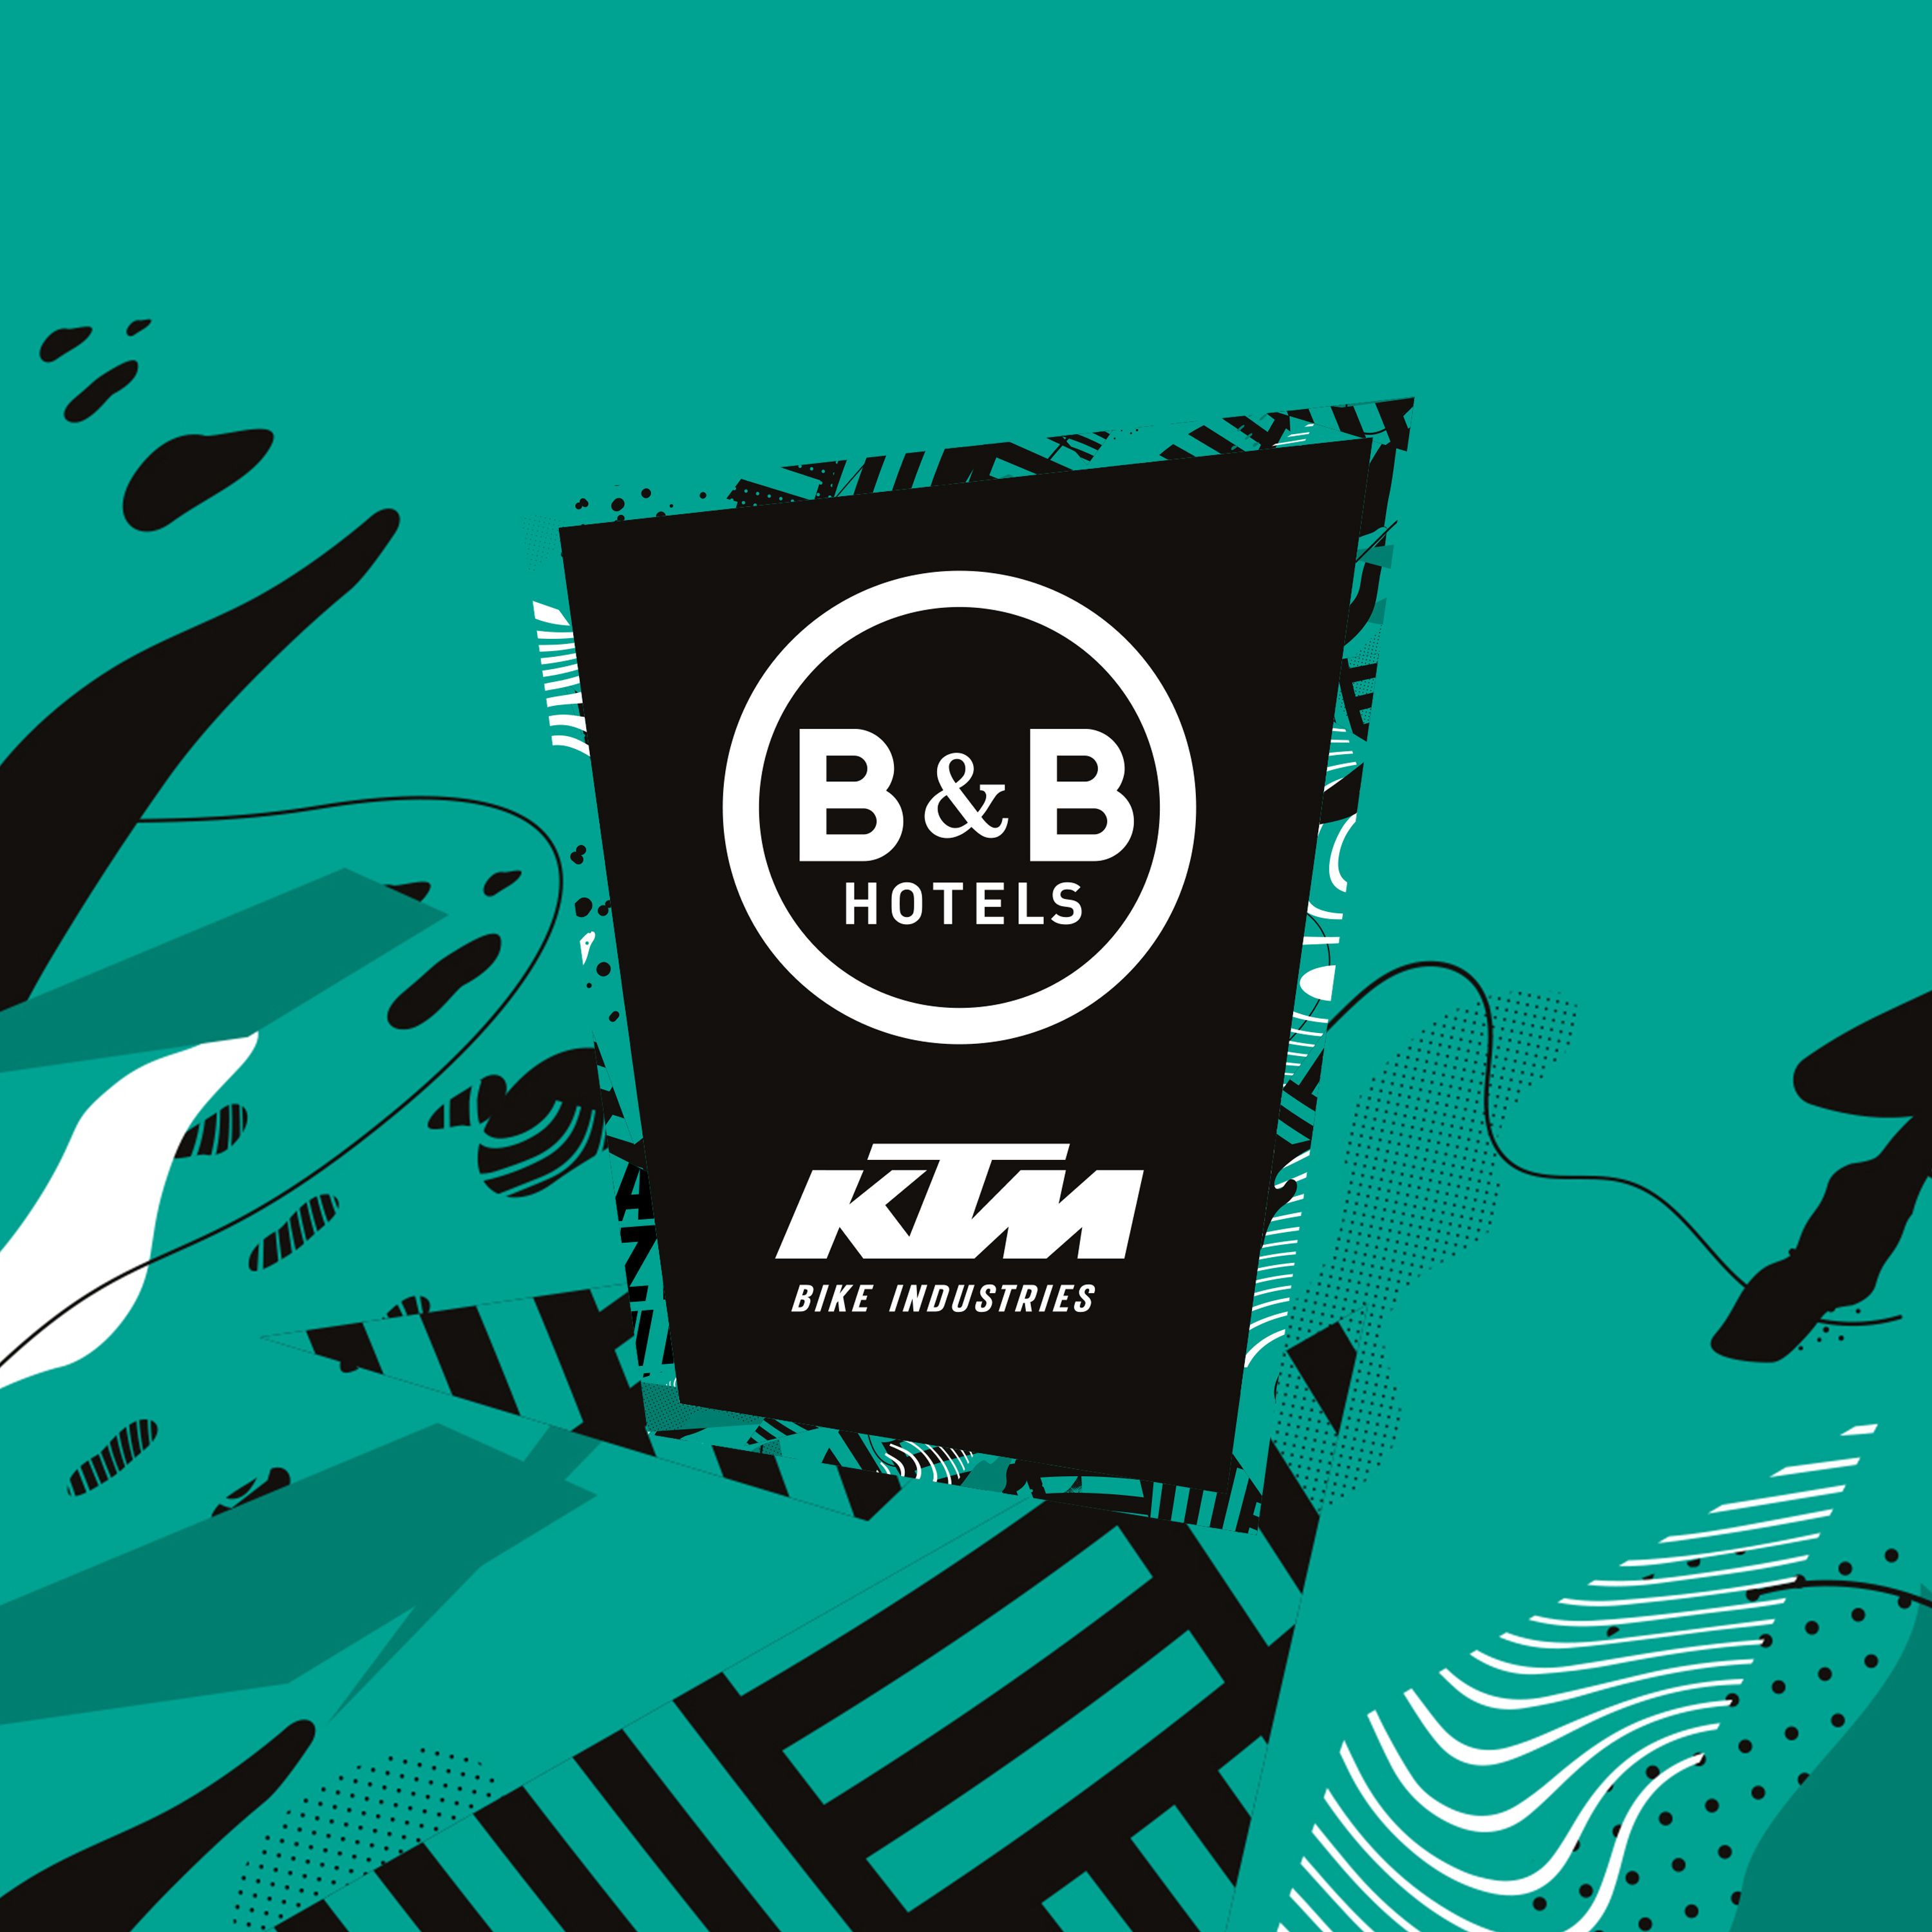 B&B HOTELS p/b KTM